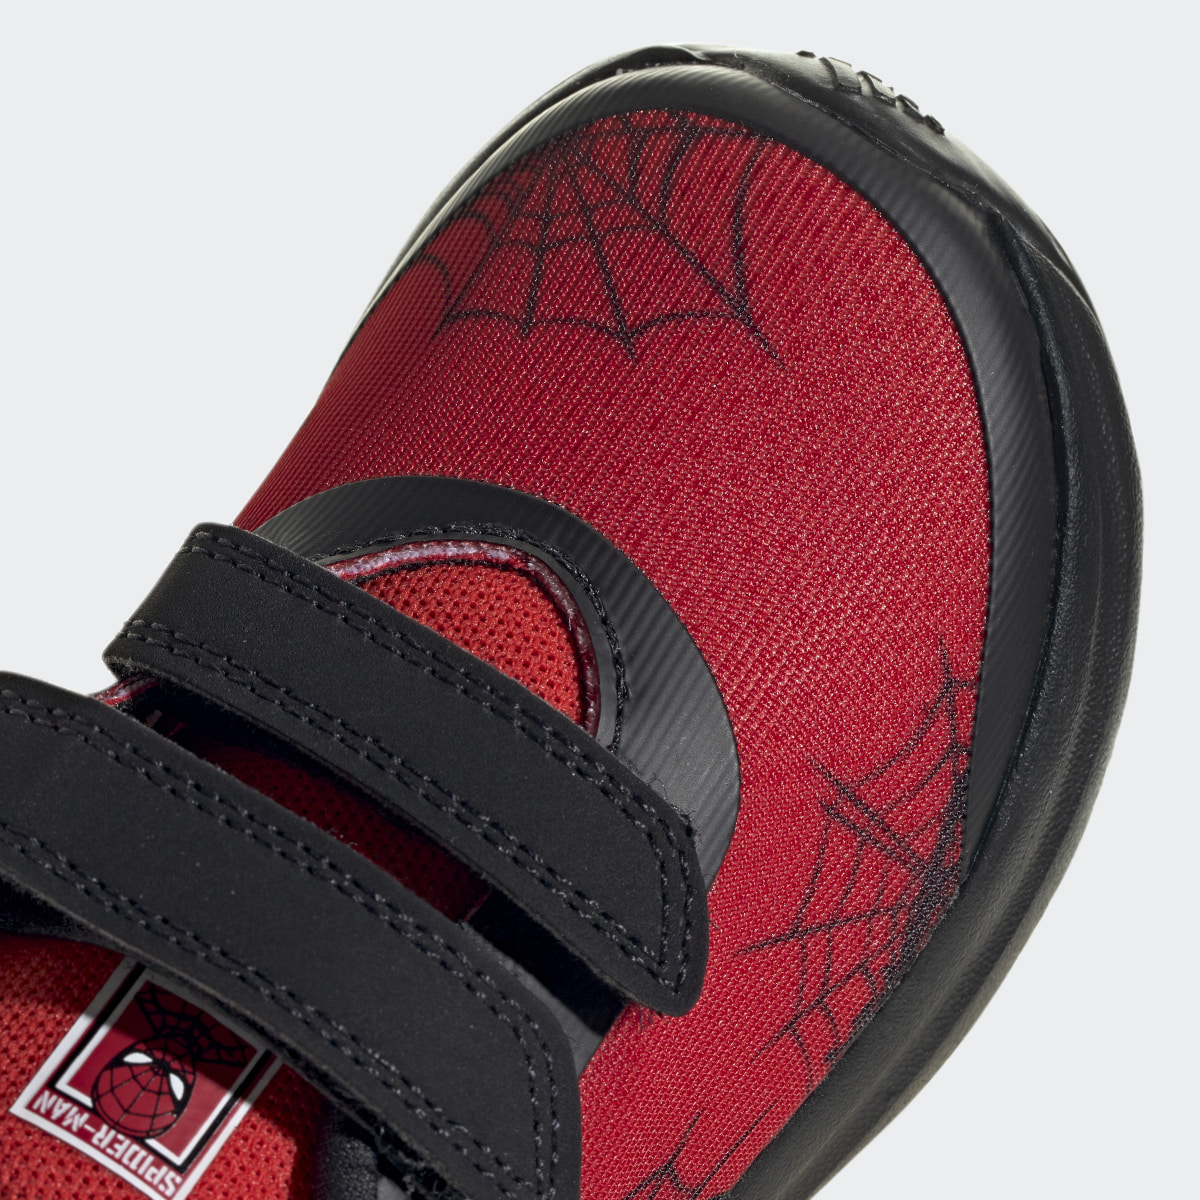 Adidas x Marvel Spider-Man Fortarun Shoes. 9